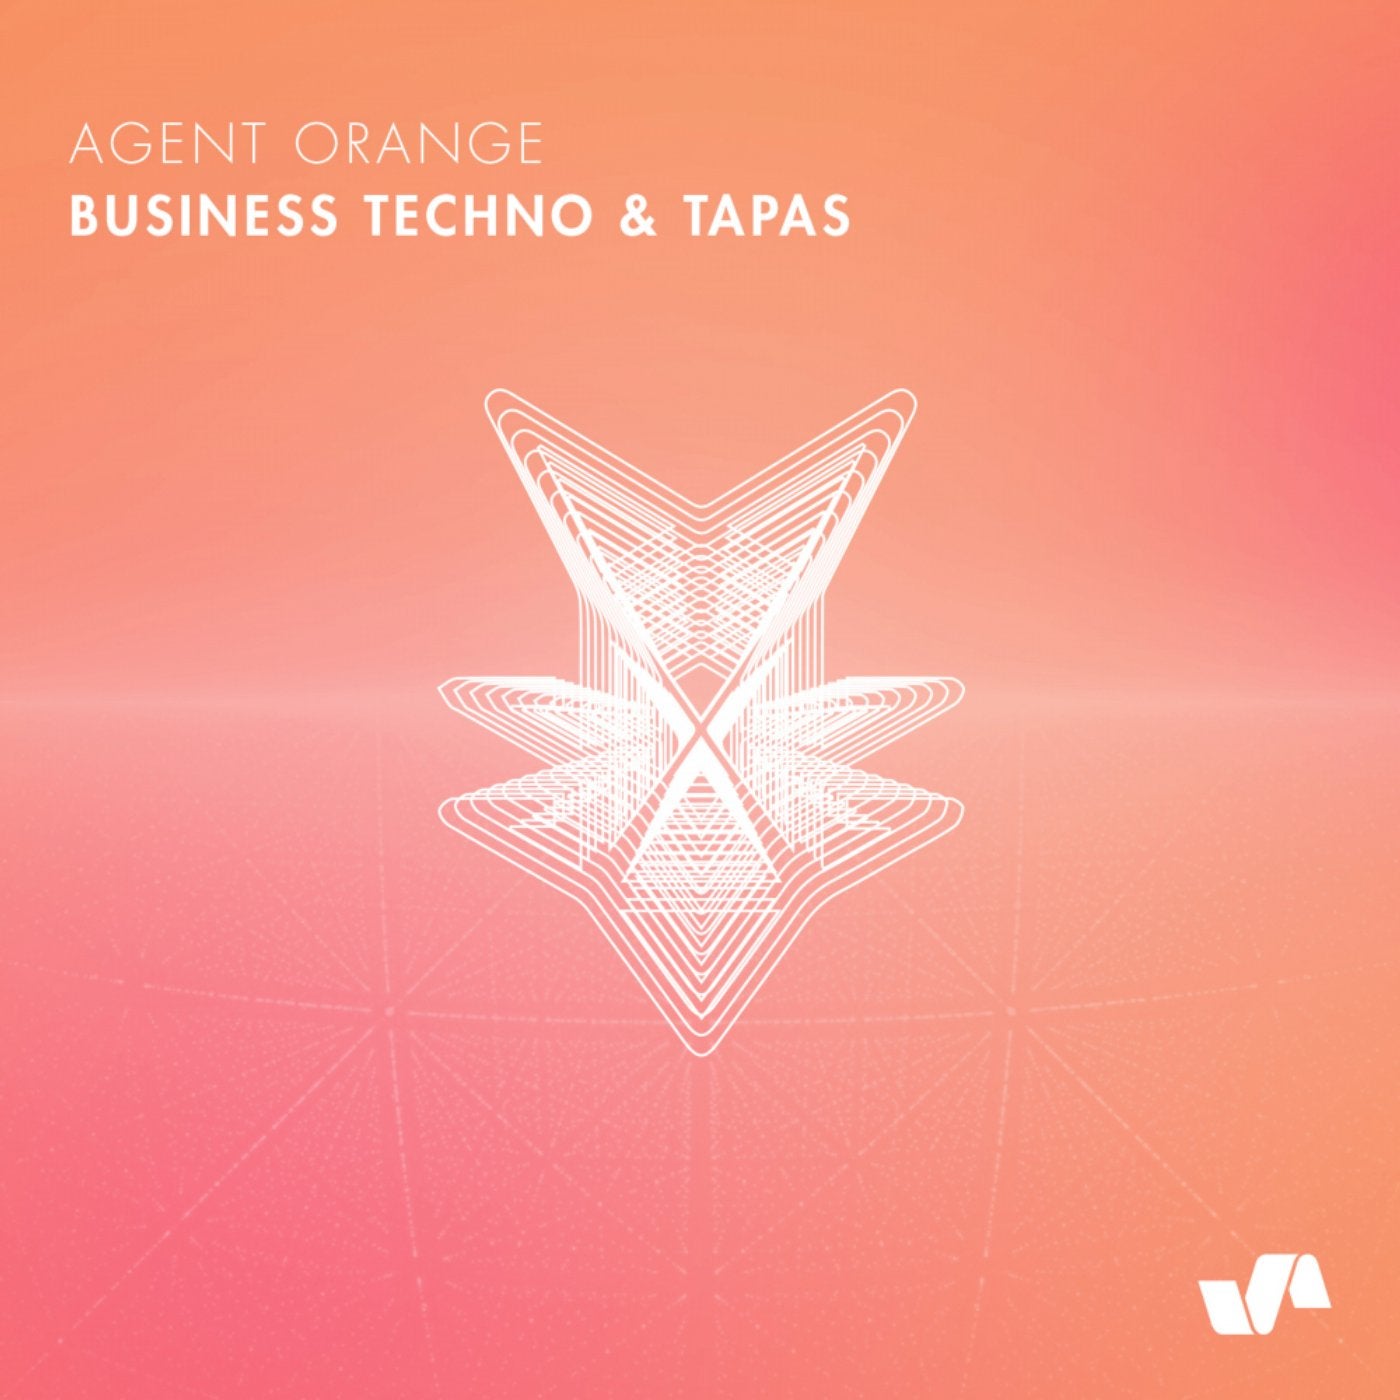 Business Techno & Tapas